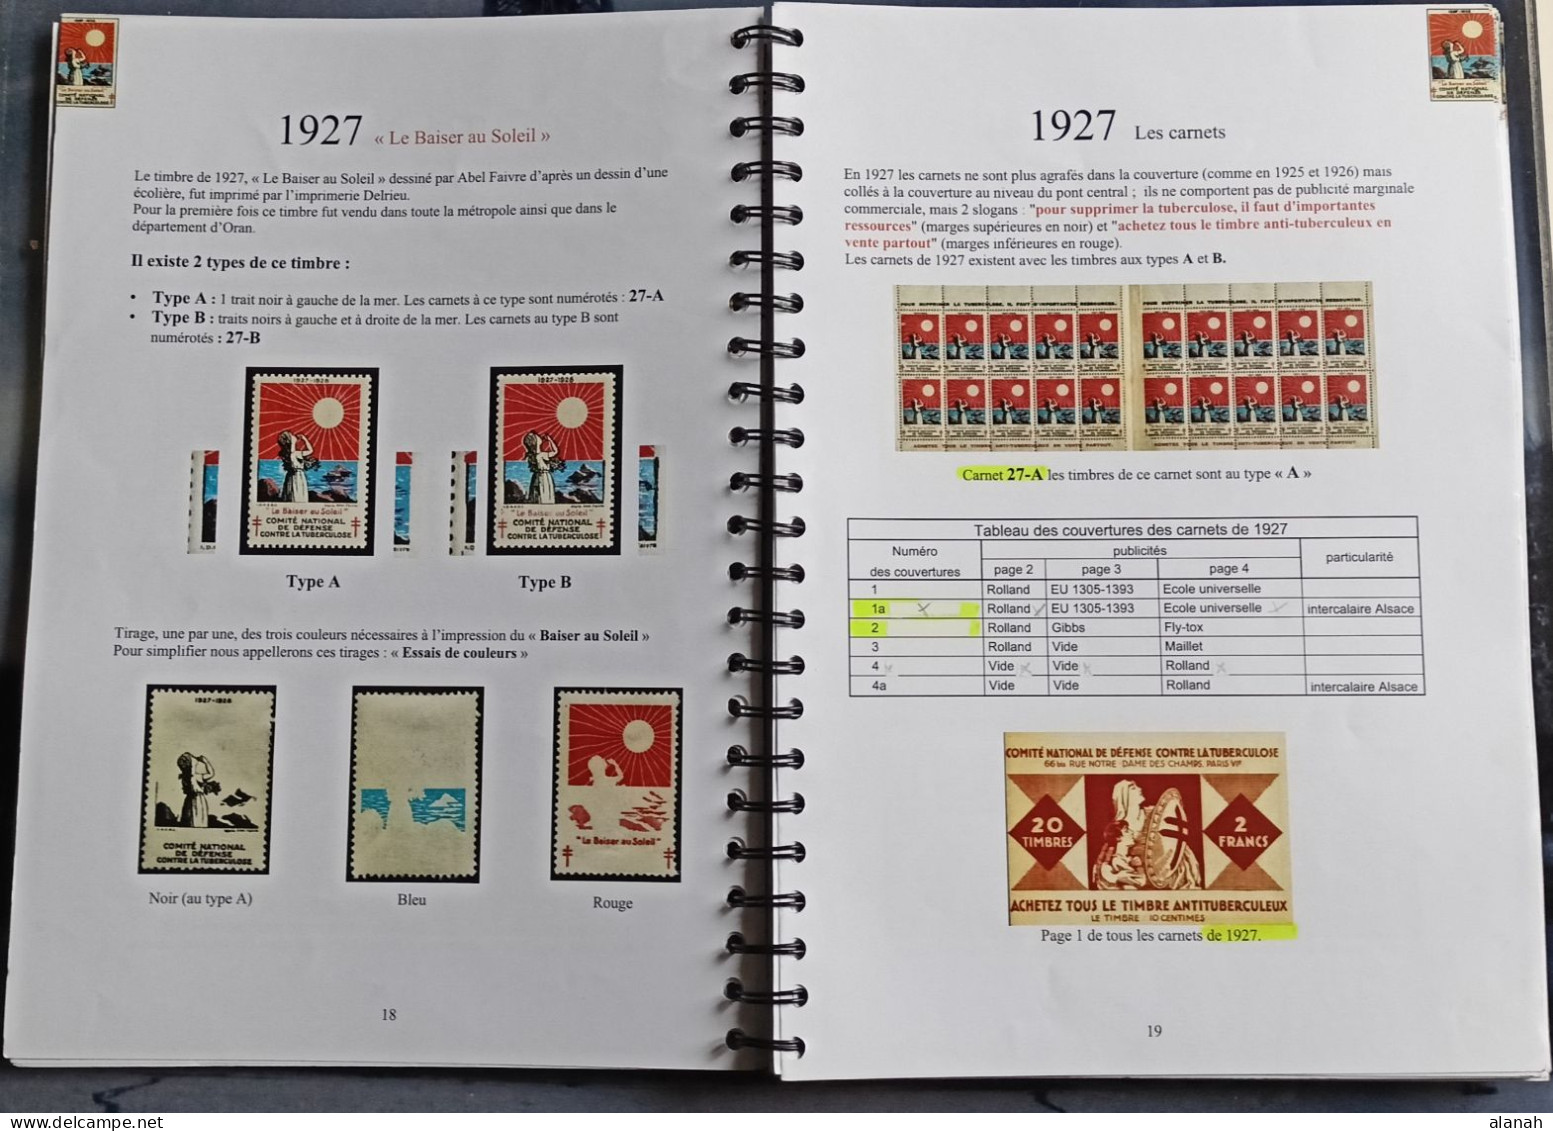 Catalogue COUTAN timbres antituberculeux 1925-1944